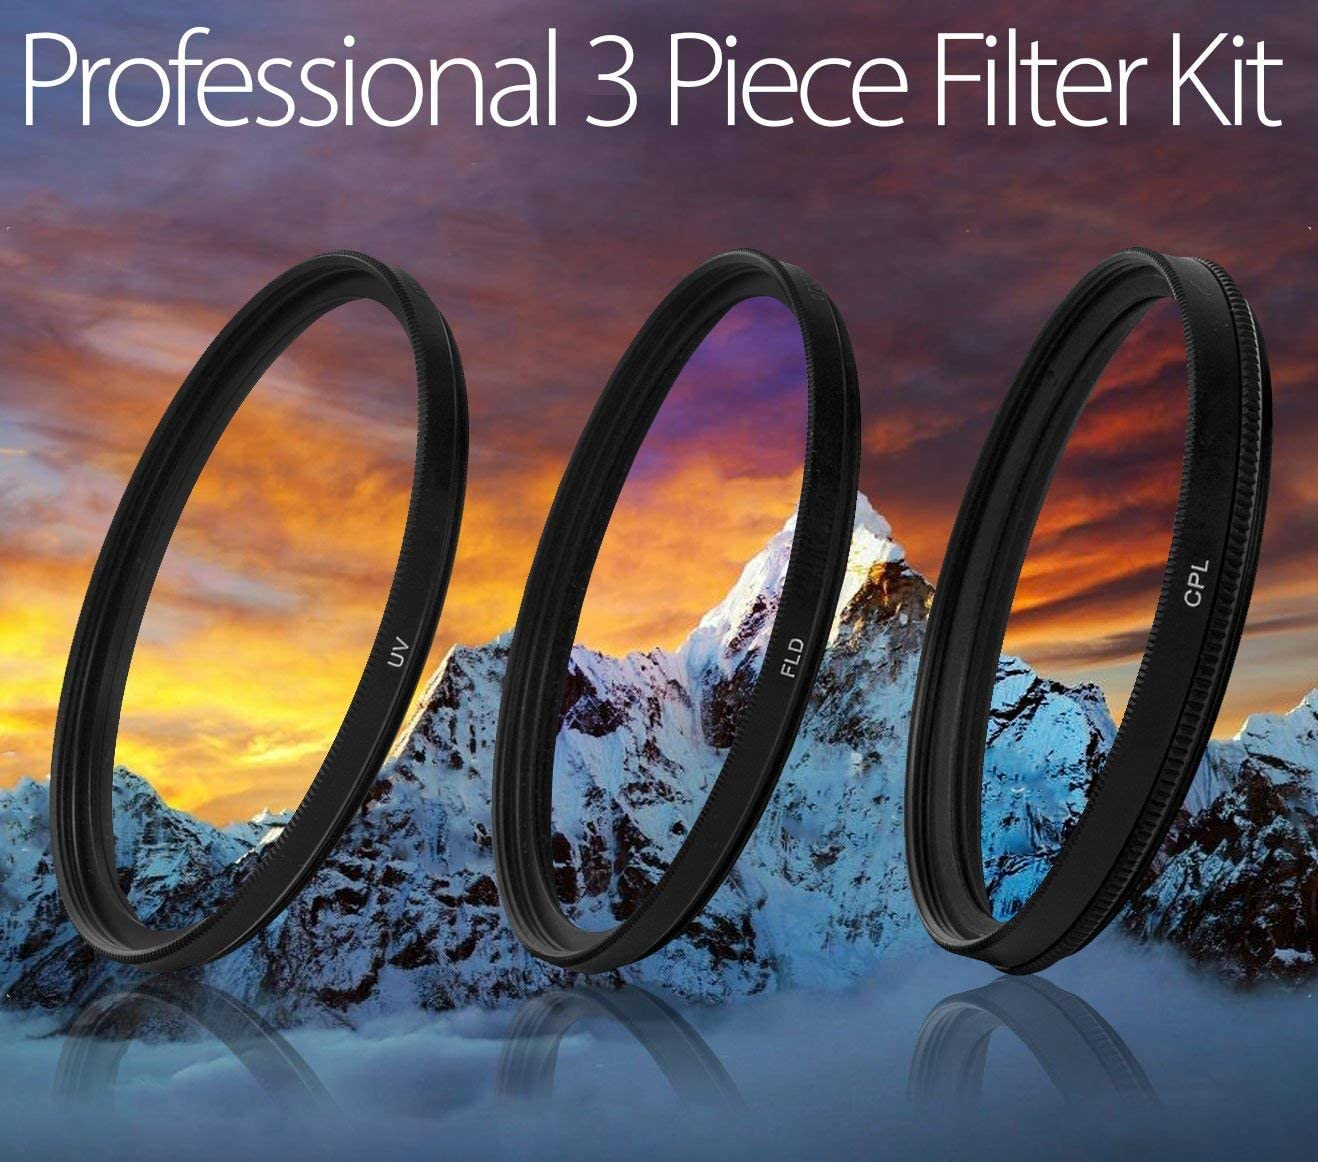 Nikon AF-S NIKKOR 24-70mm f/2.8G ED Zoom Lens (2164) with Padded Lens Case + Macro Filter Kit + UV, CPL, FL Lens Filters + Tulip Hood + Lens Cap Keeper + Cleaning Kit (Renewed)